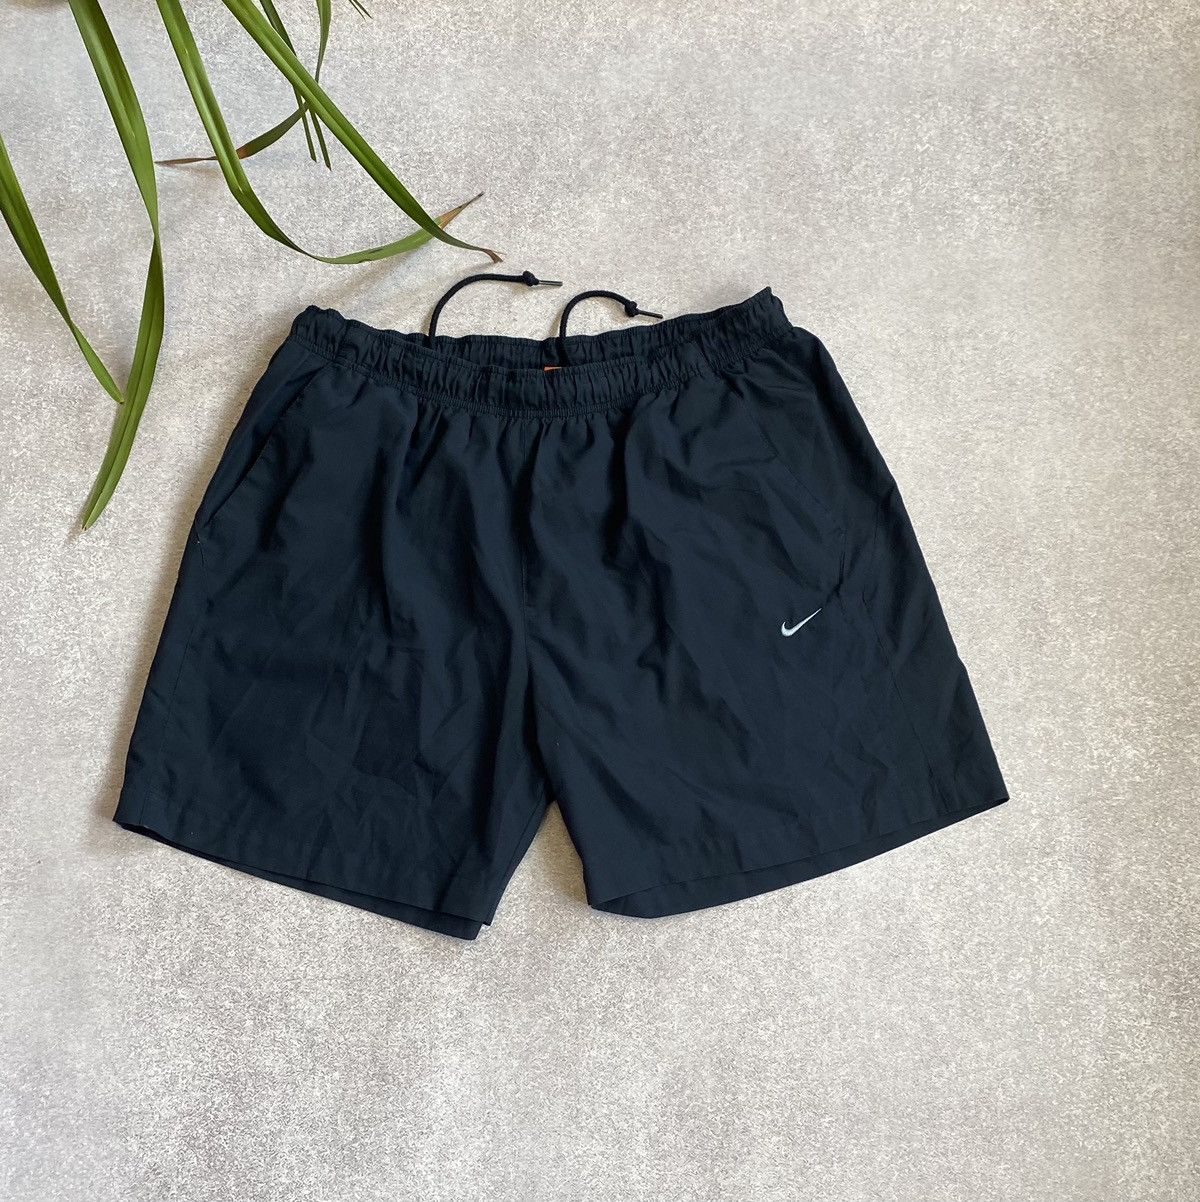 Stussy Nike Shorts | Grailed